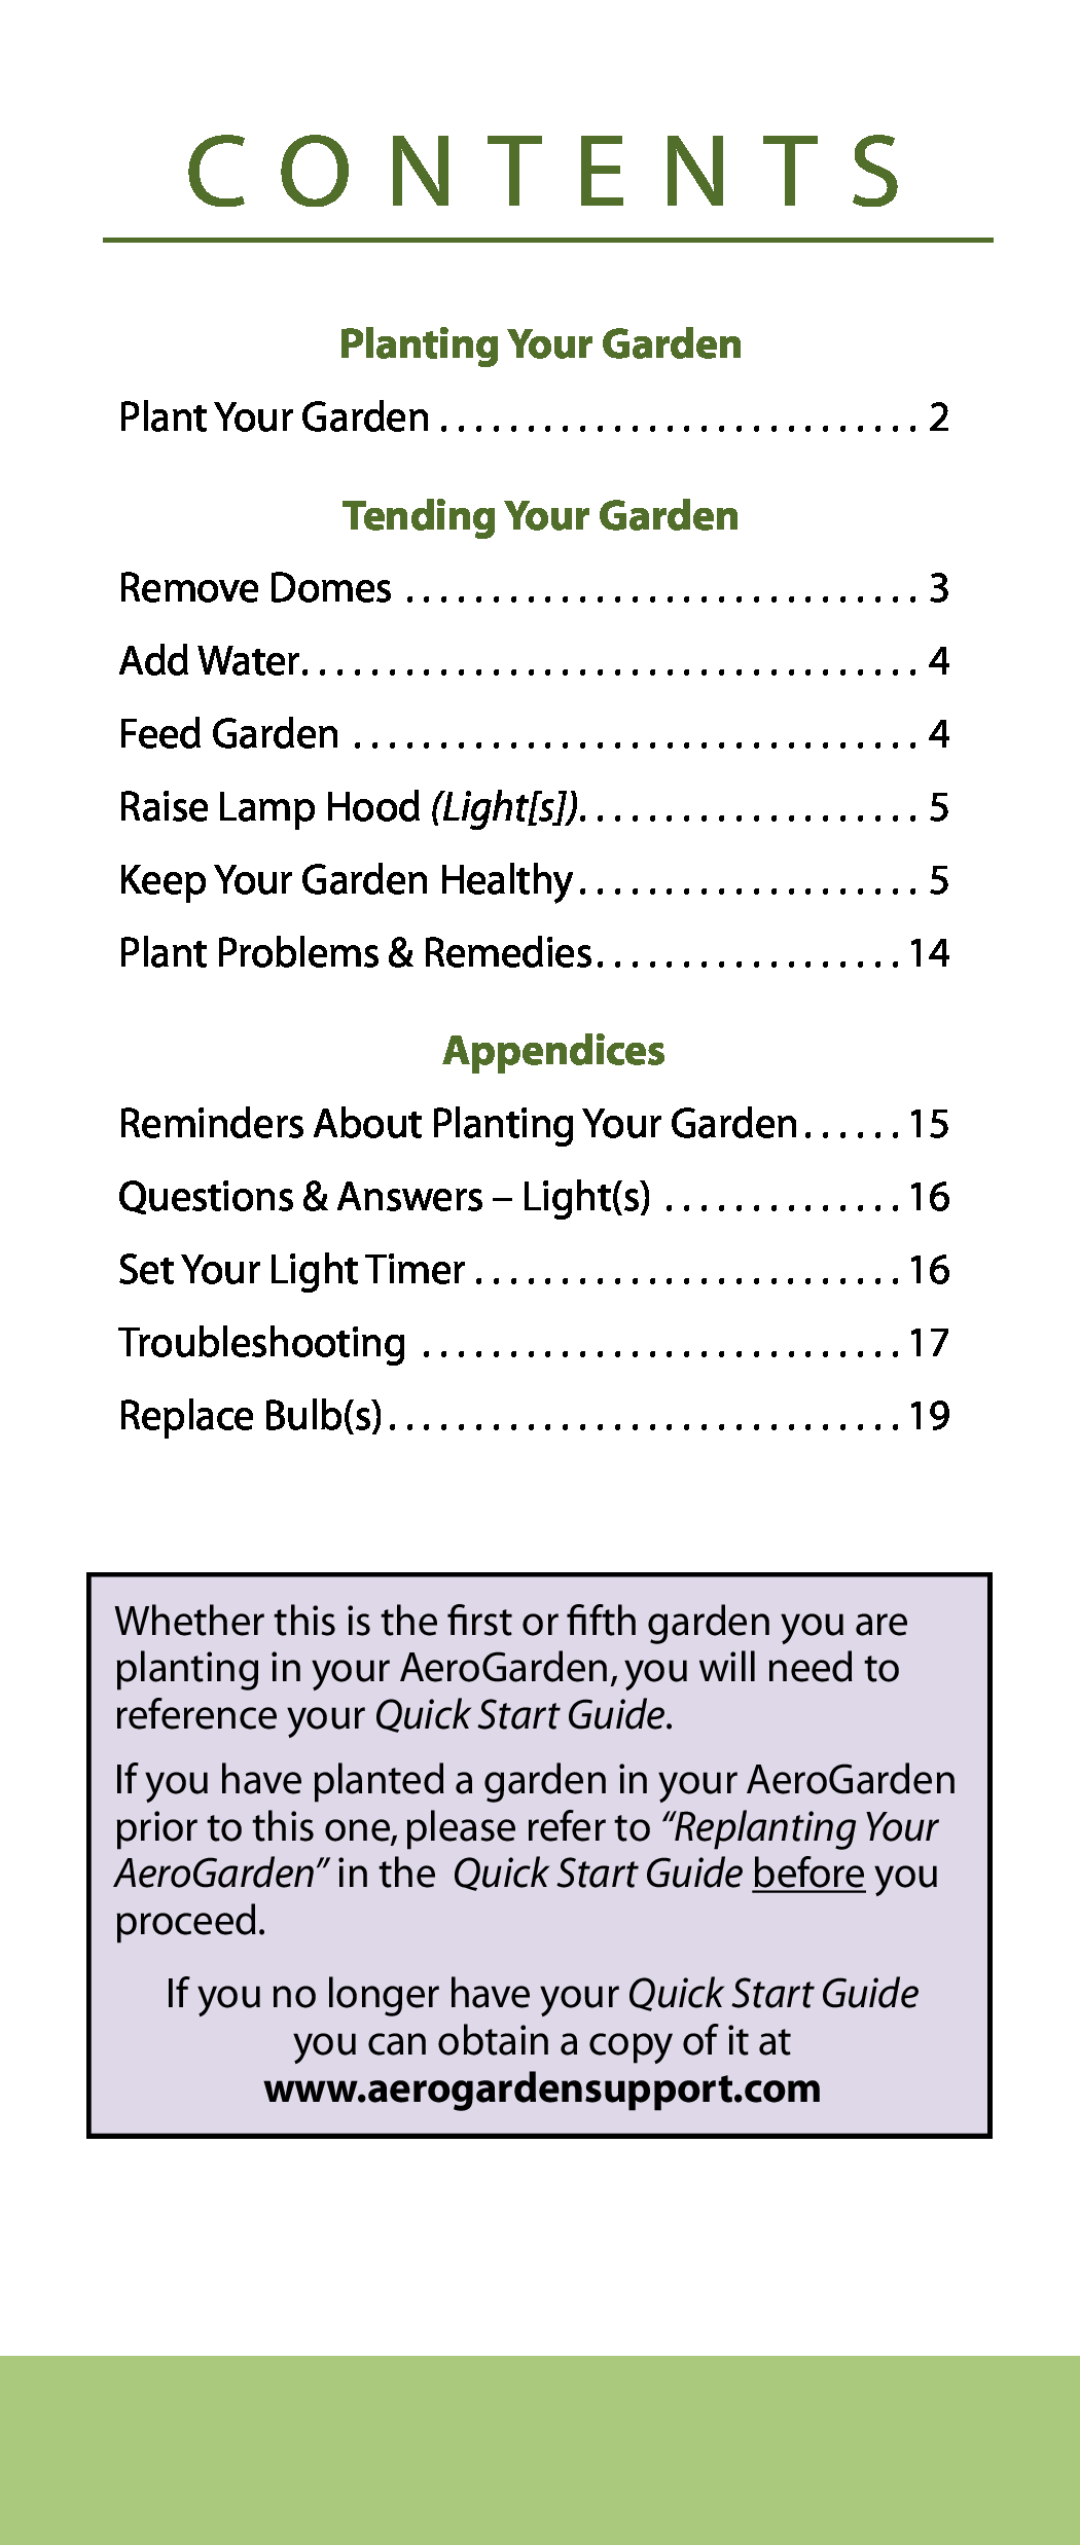 AeroGarden Flower Series manual Planting Your Garden, Tending Your Garden, Appendices, C O N T E N T S 